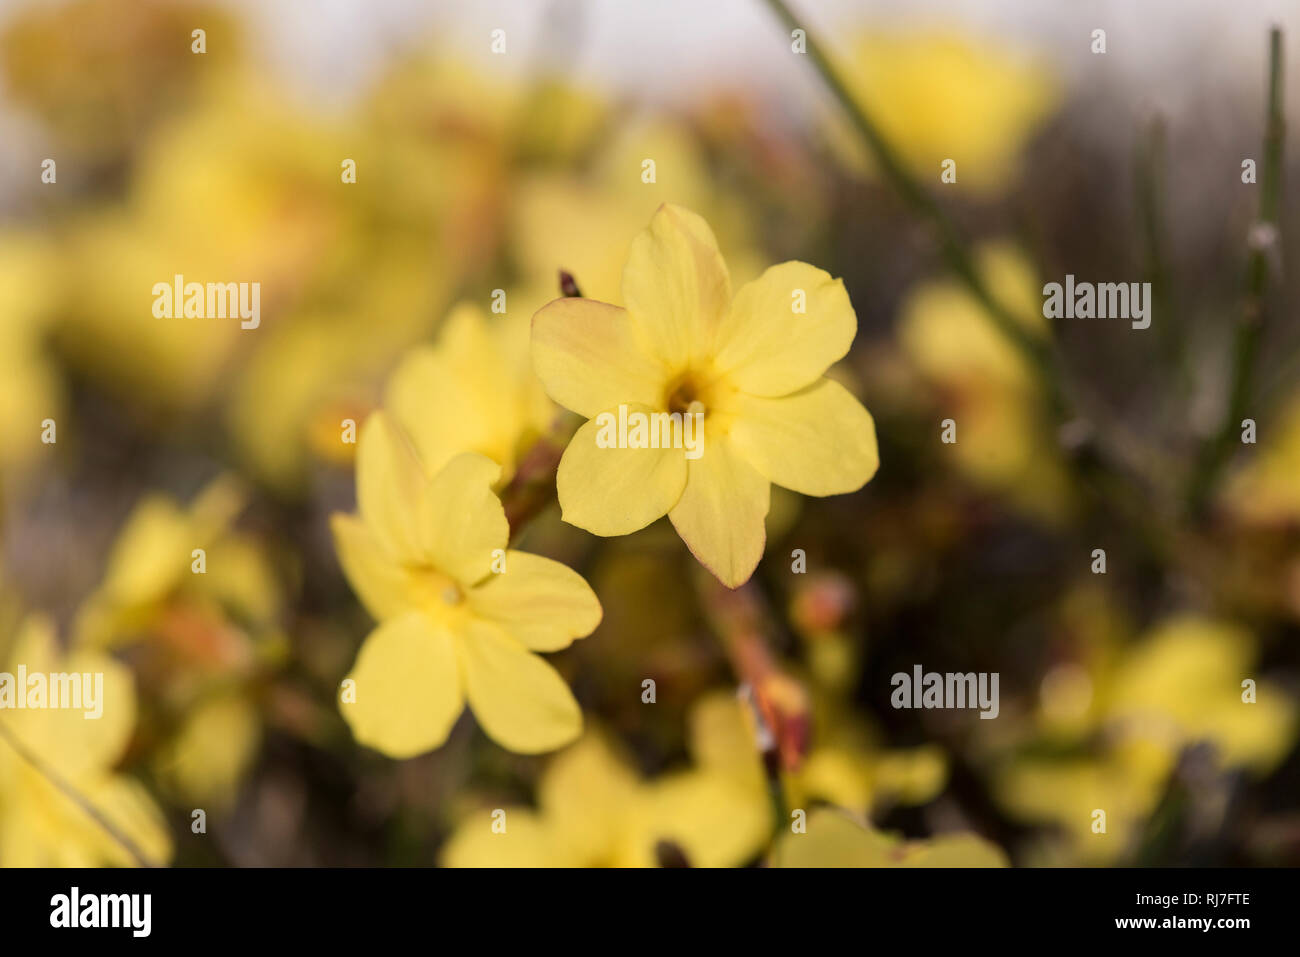 Frühblüher in der Natur, Winterjasmin, gelbe Blüten, Nahaufnahme Stock Photo